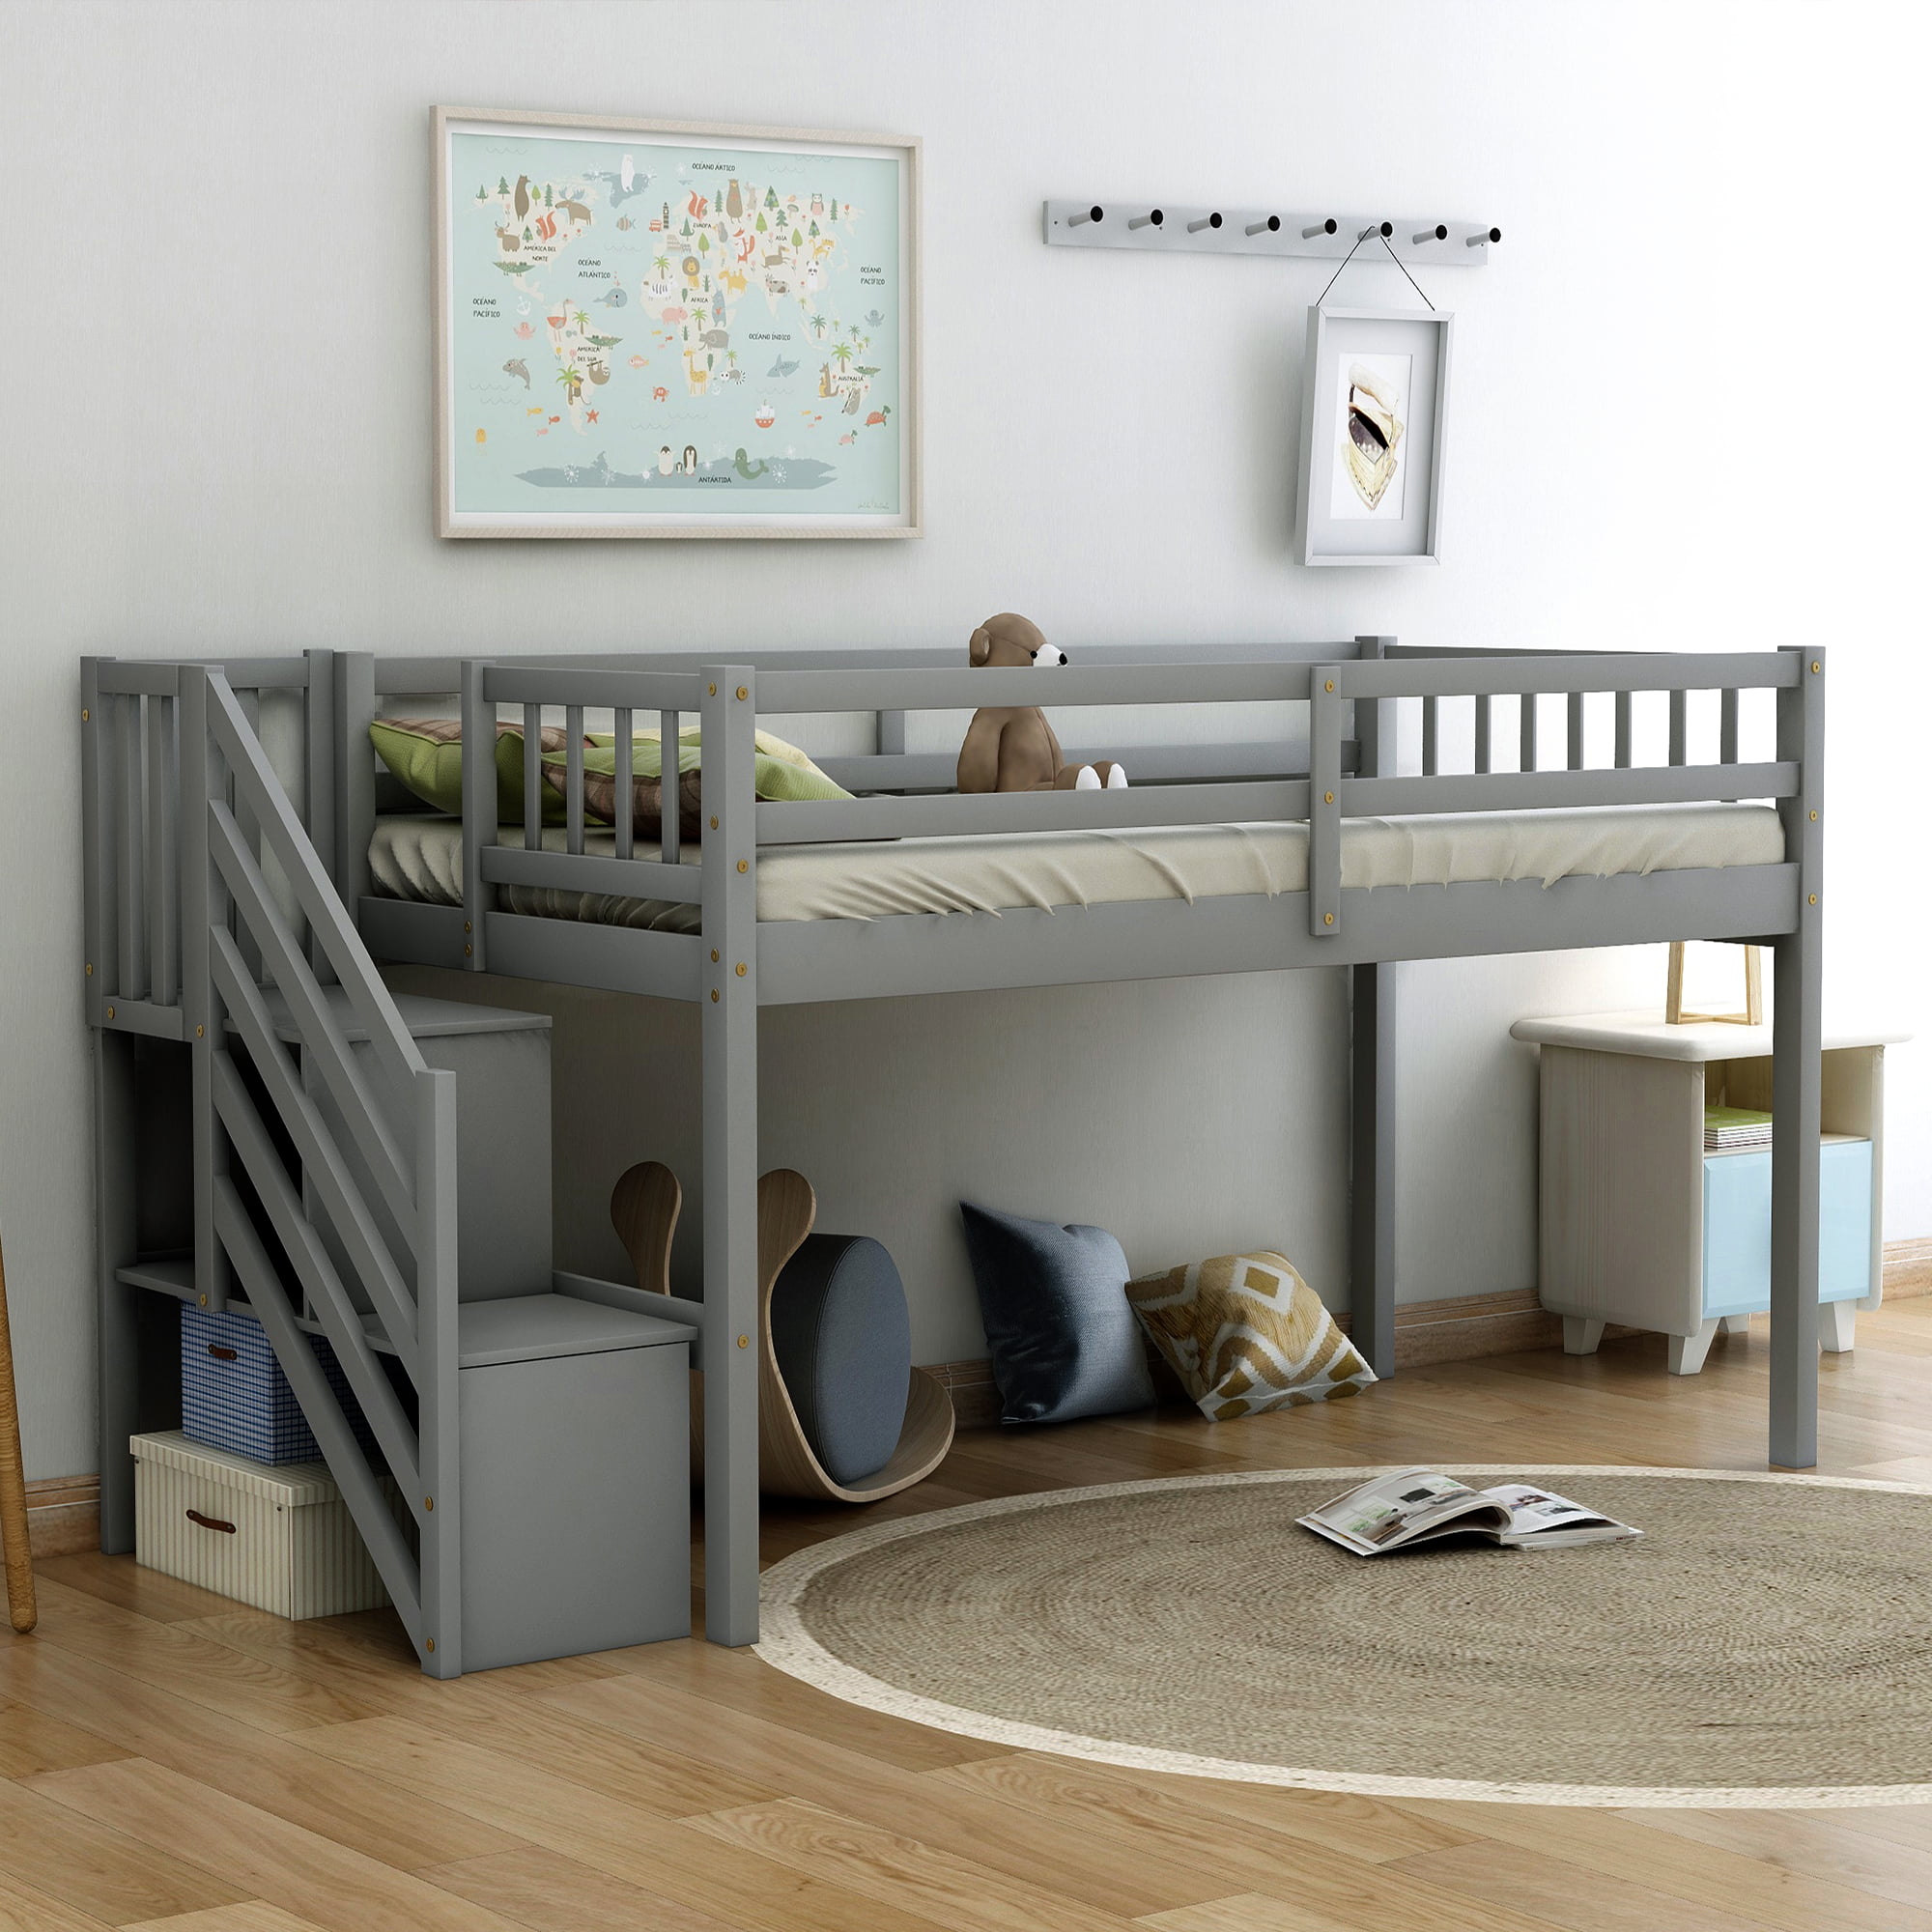 EUROCO Wood Twin Loft Bed with Stairs, Guard Rail and Storage Shelf for Kids, Gray - Walmart.com - Walmart.com